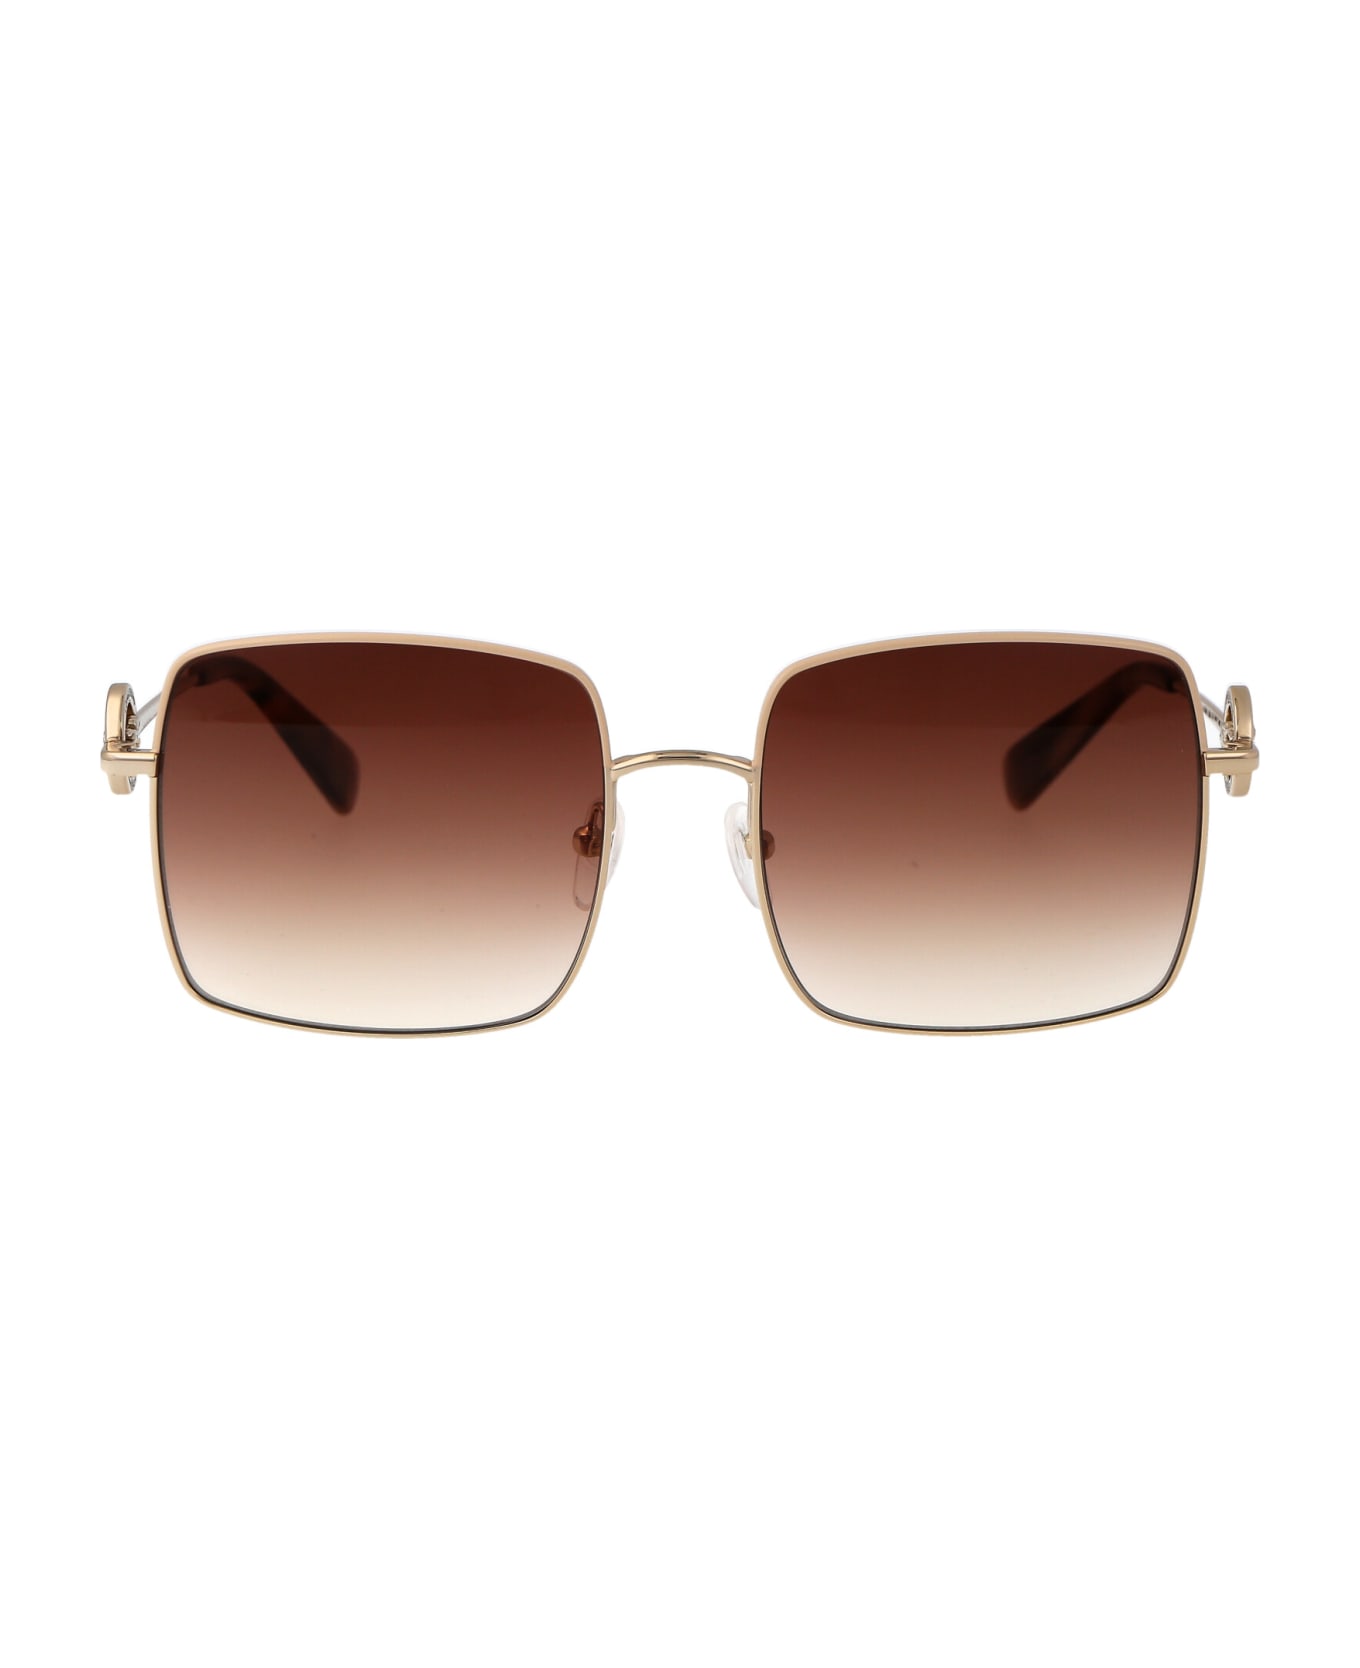 Longchamp Lo162s Sunglasses - 748 GOLD